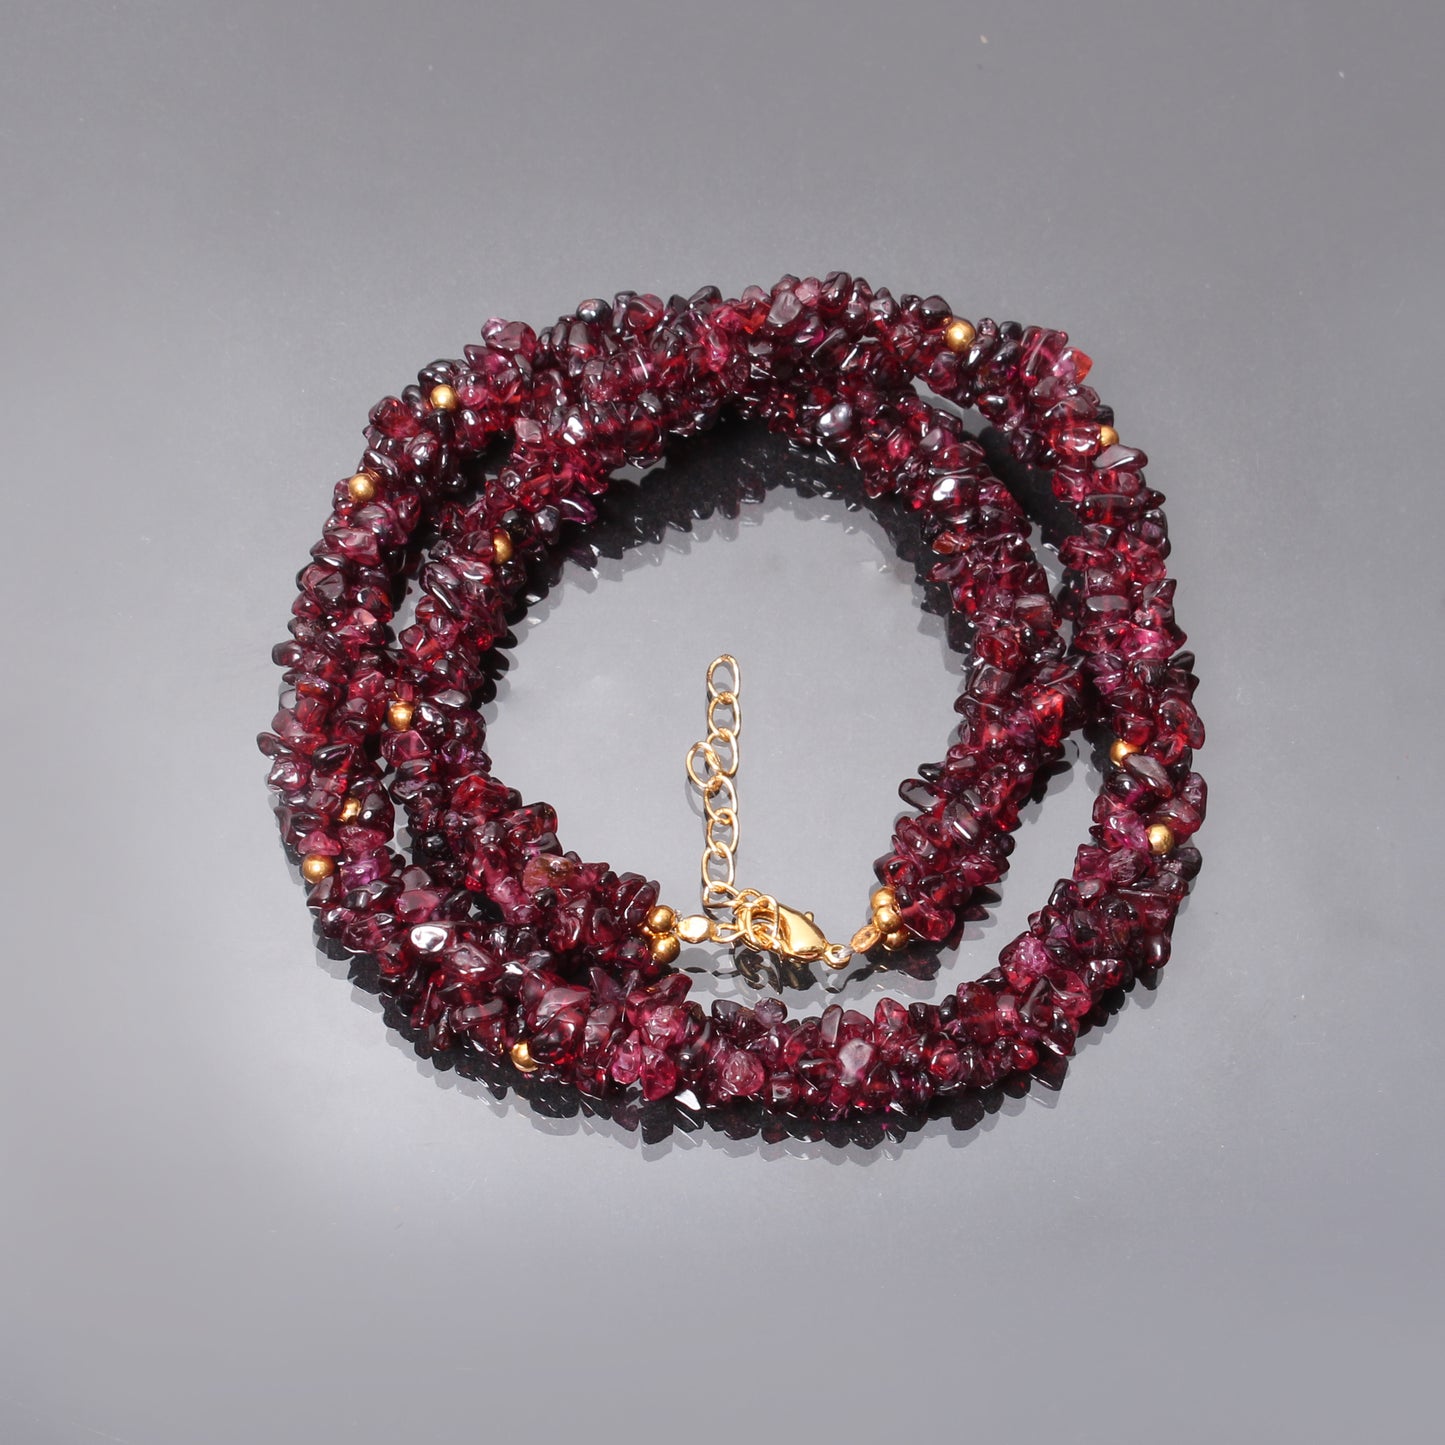 Birthstone Garnet Chips Beaded Necklace, Handmade Beads Jewelry